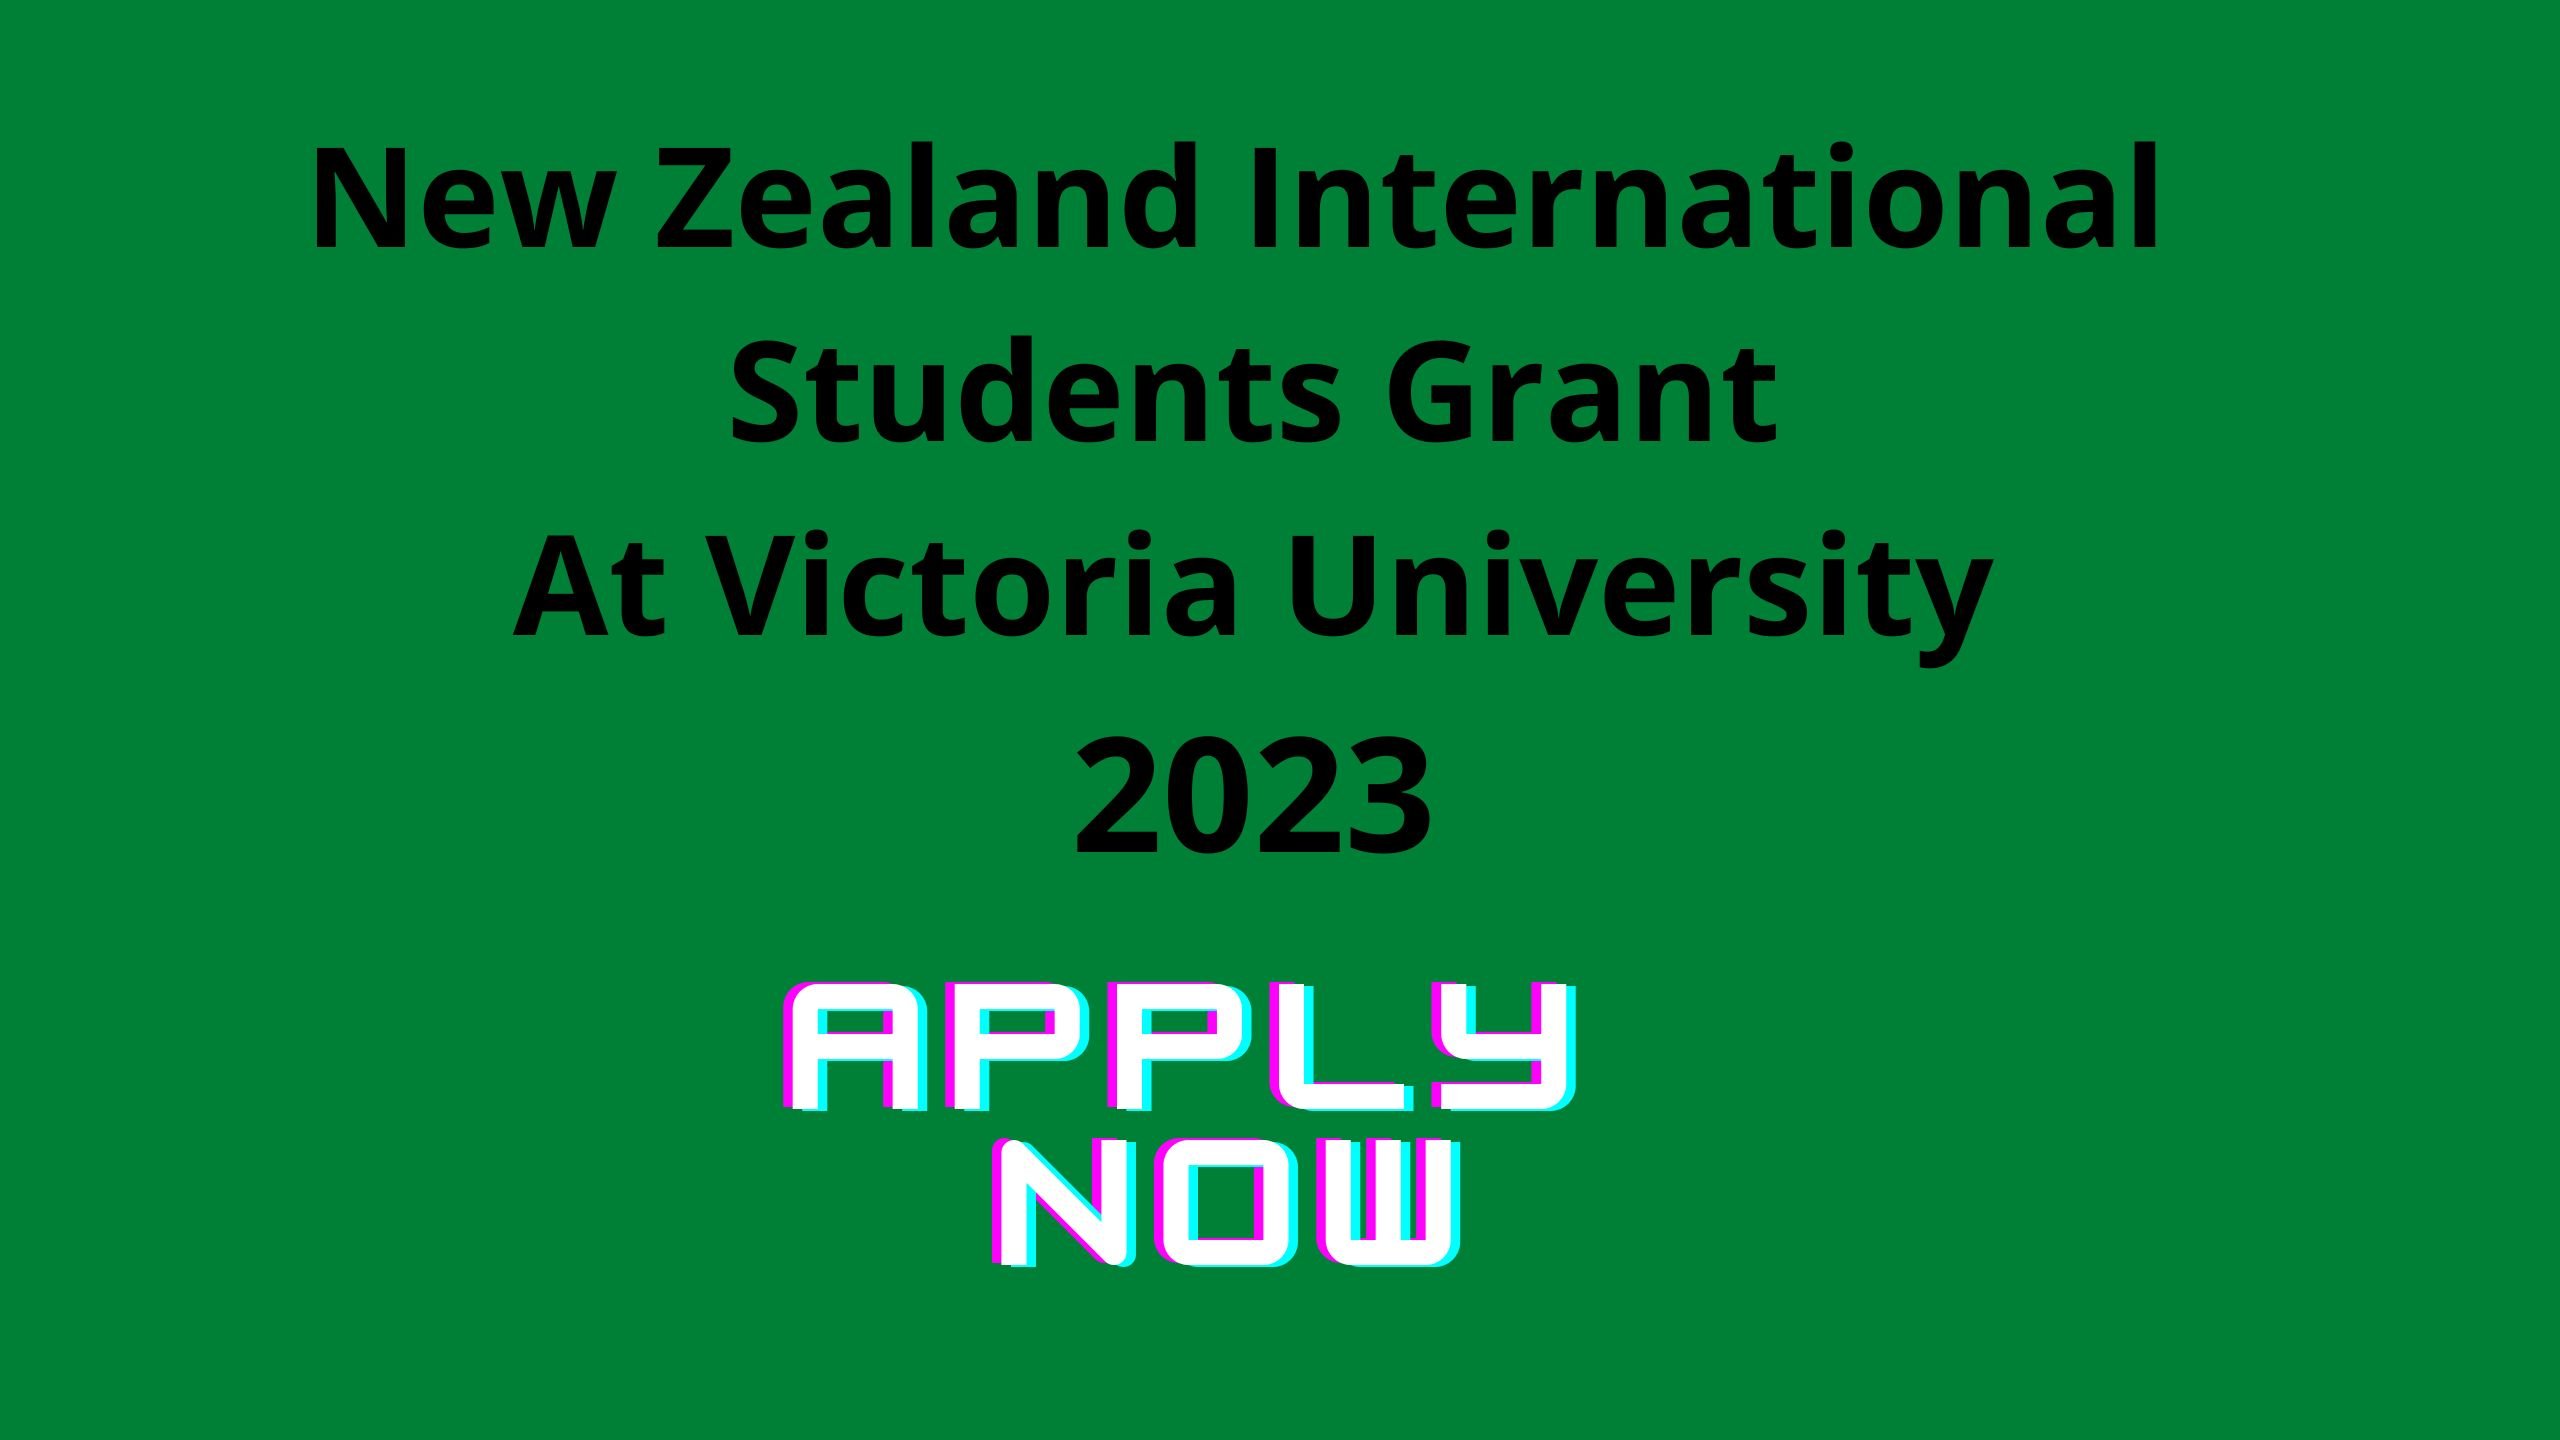 New Zealand International Students Grant At Victoria University 2023